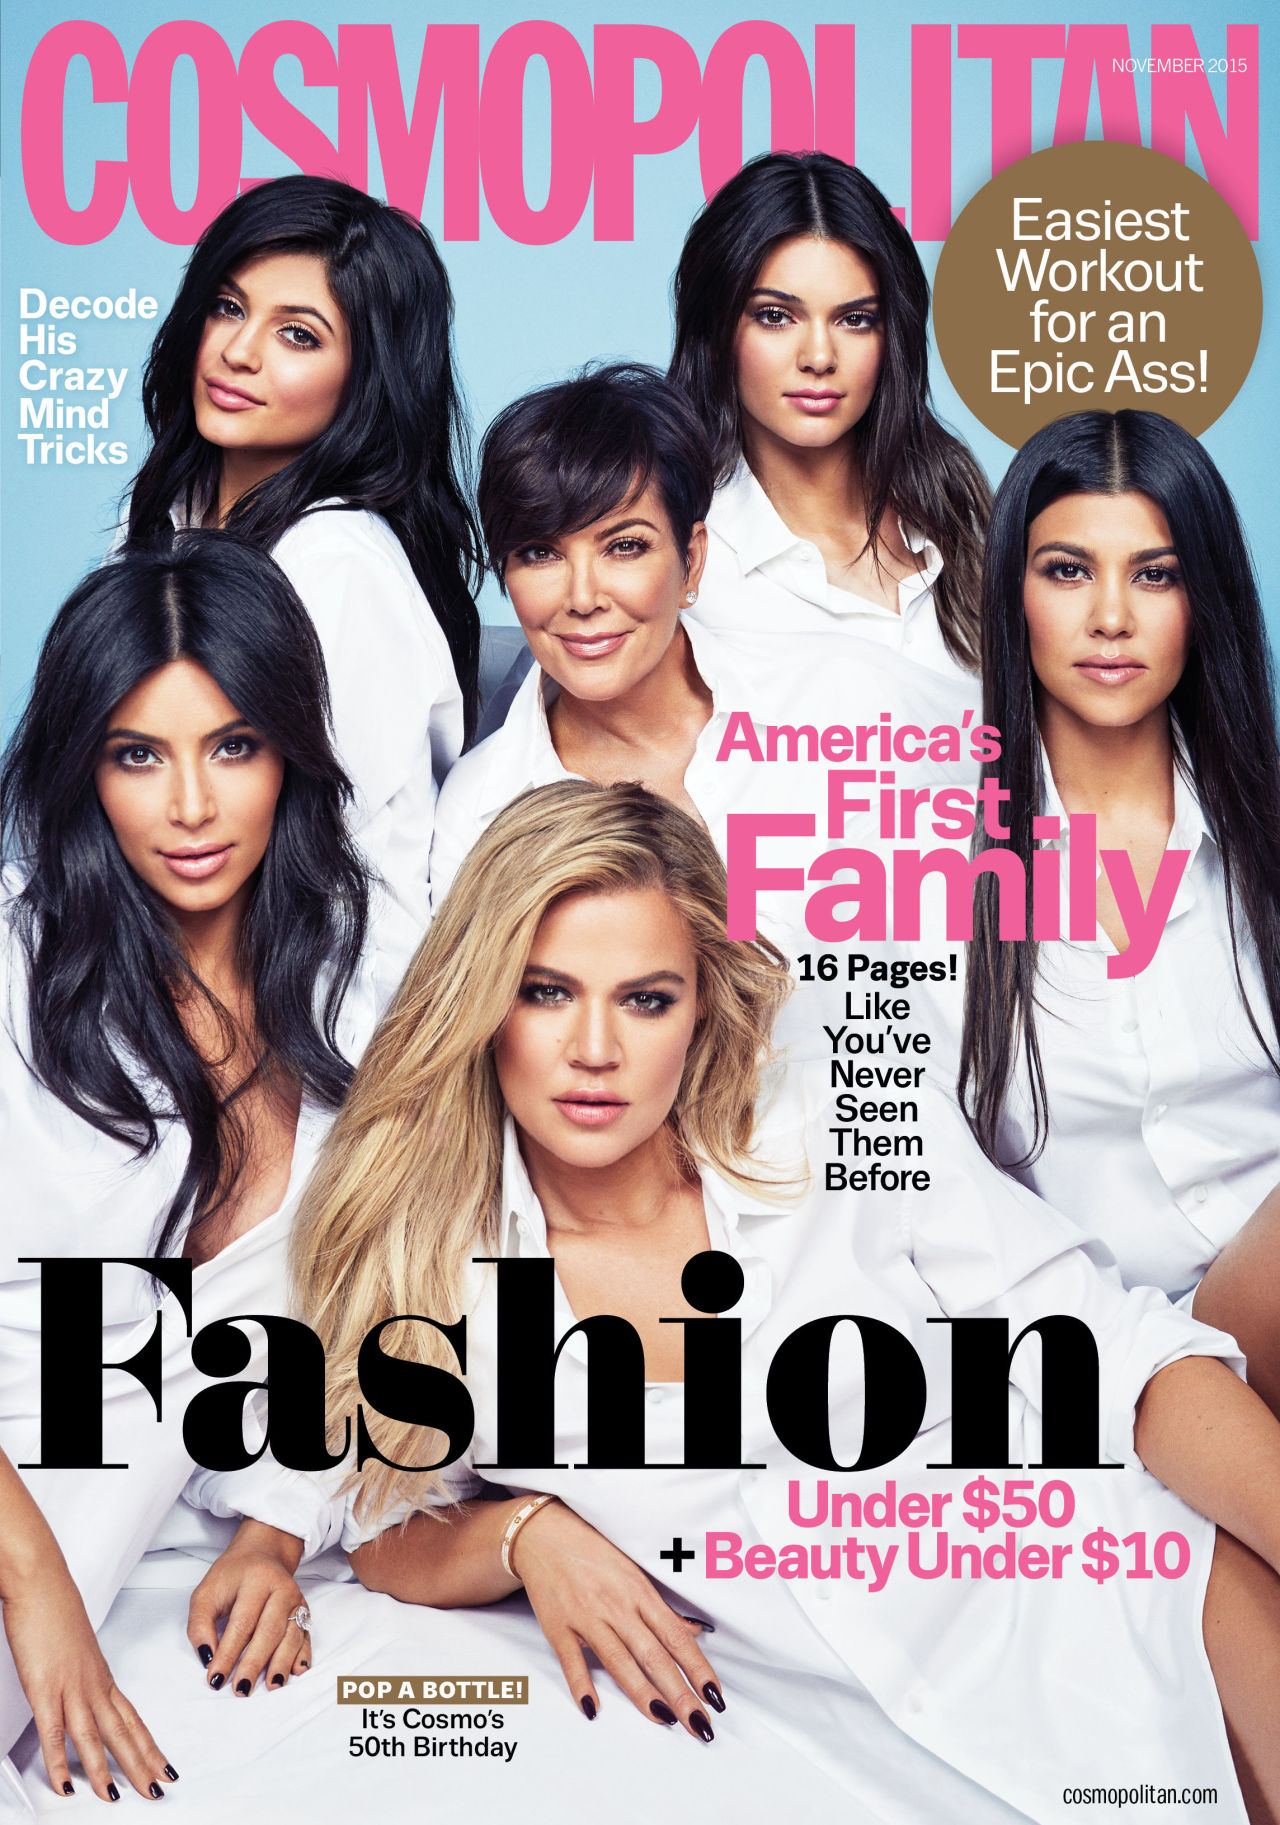 Cosmopolitan Kardashian cover